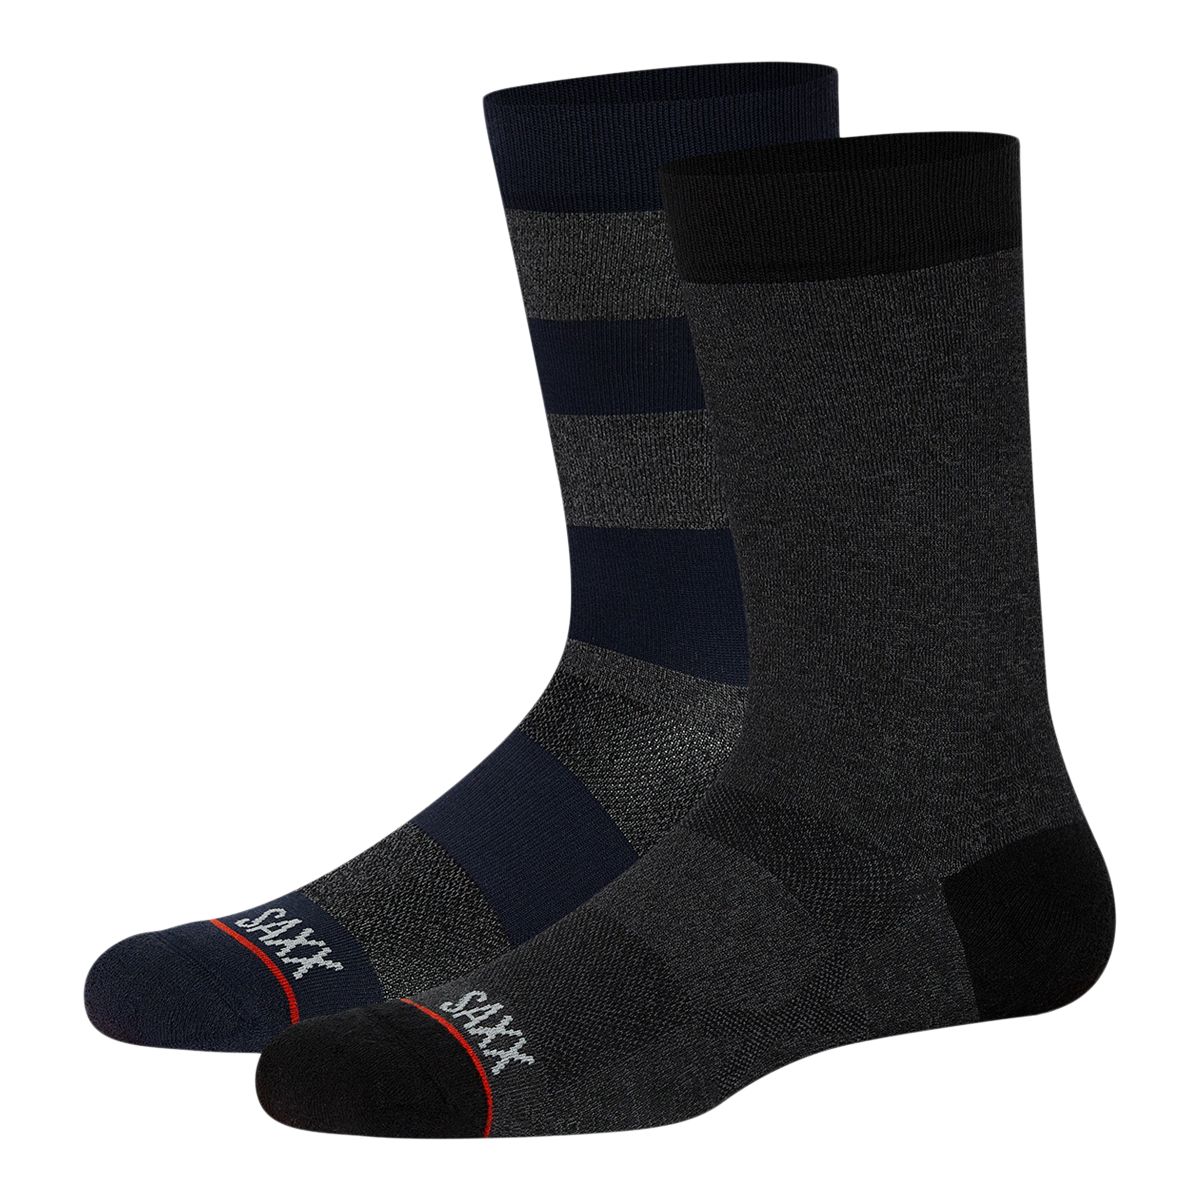 Sports socks Falke 4 Grip - Socks - Textile - Table tennis